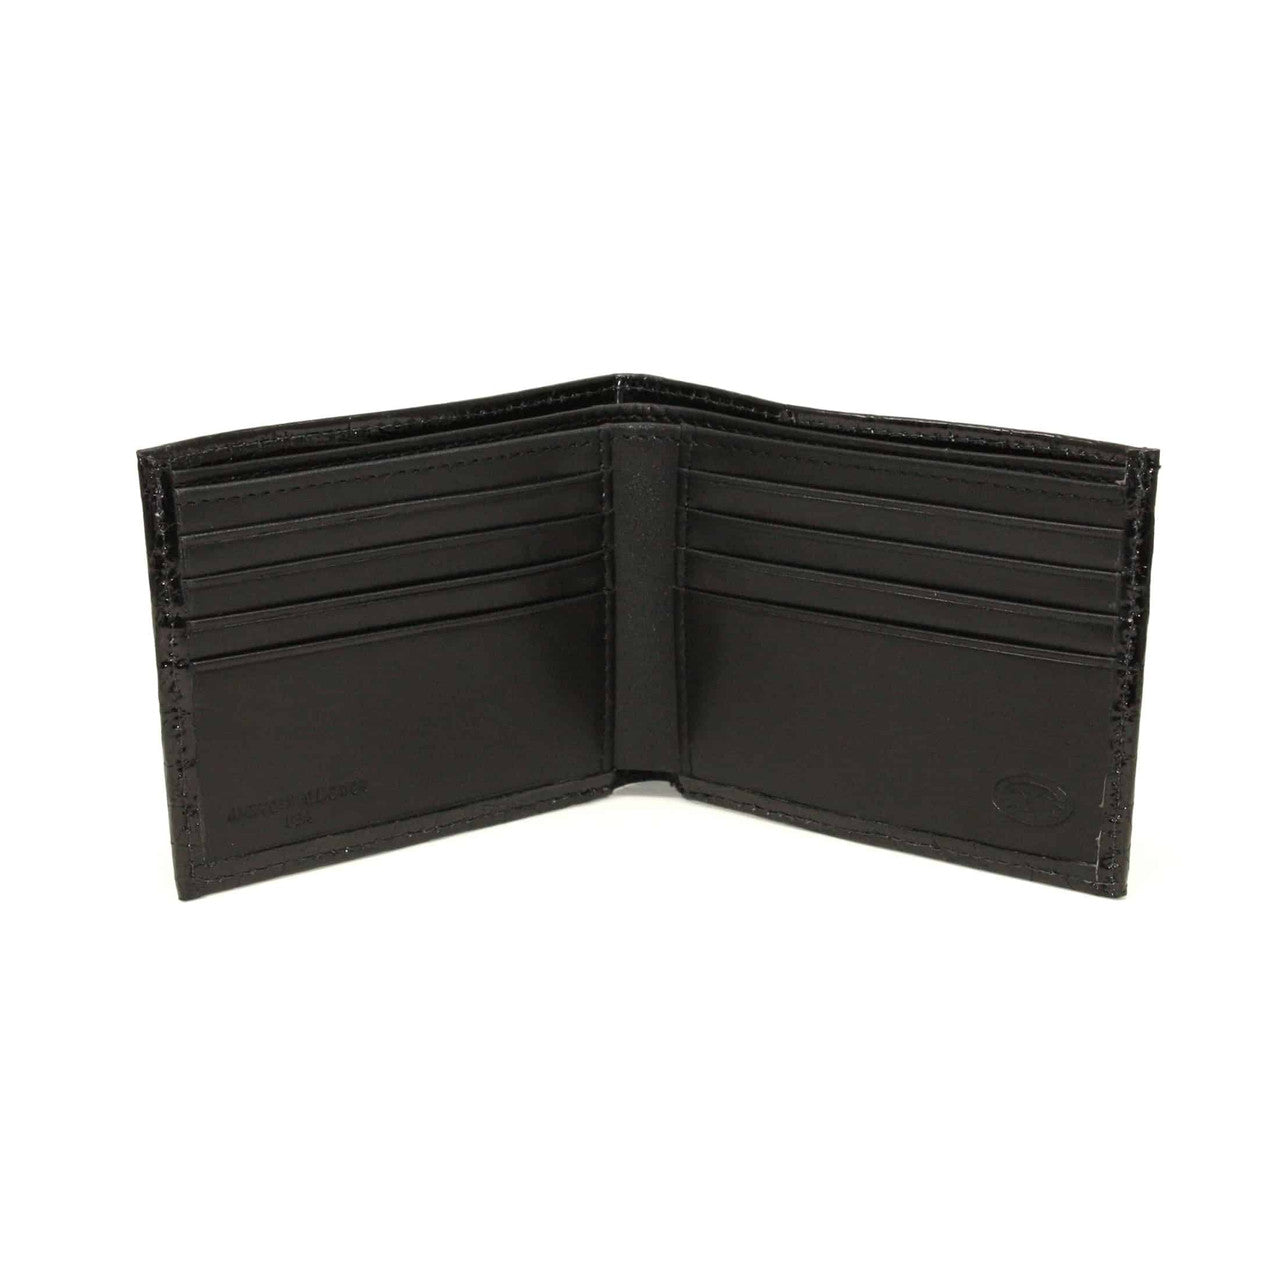 Genuine Alligator Billfold Wallet in Black by Torino Leather